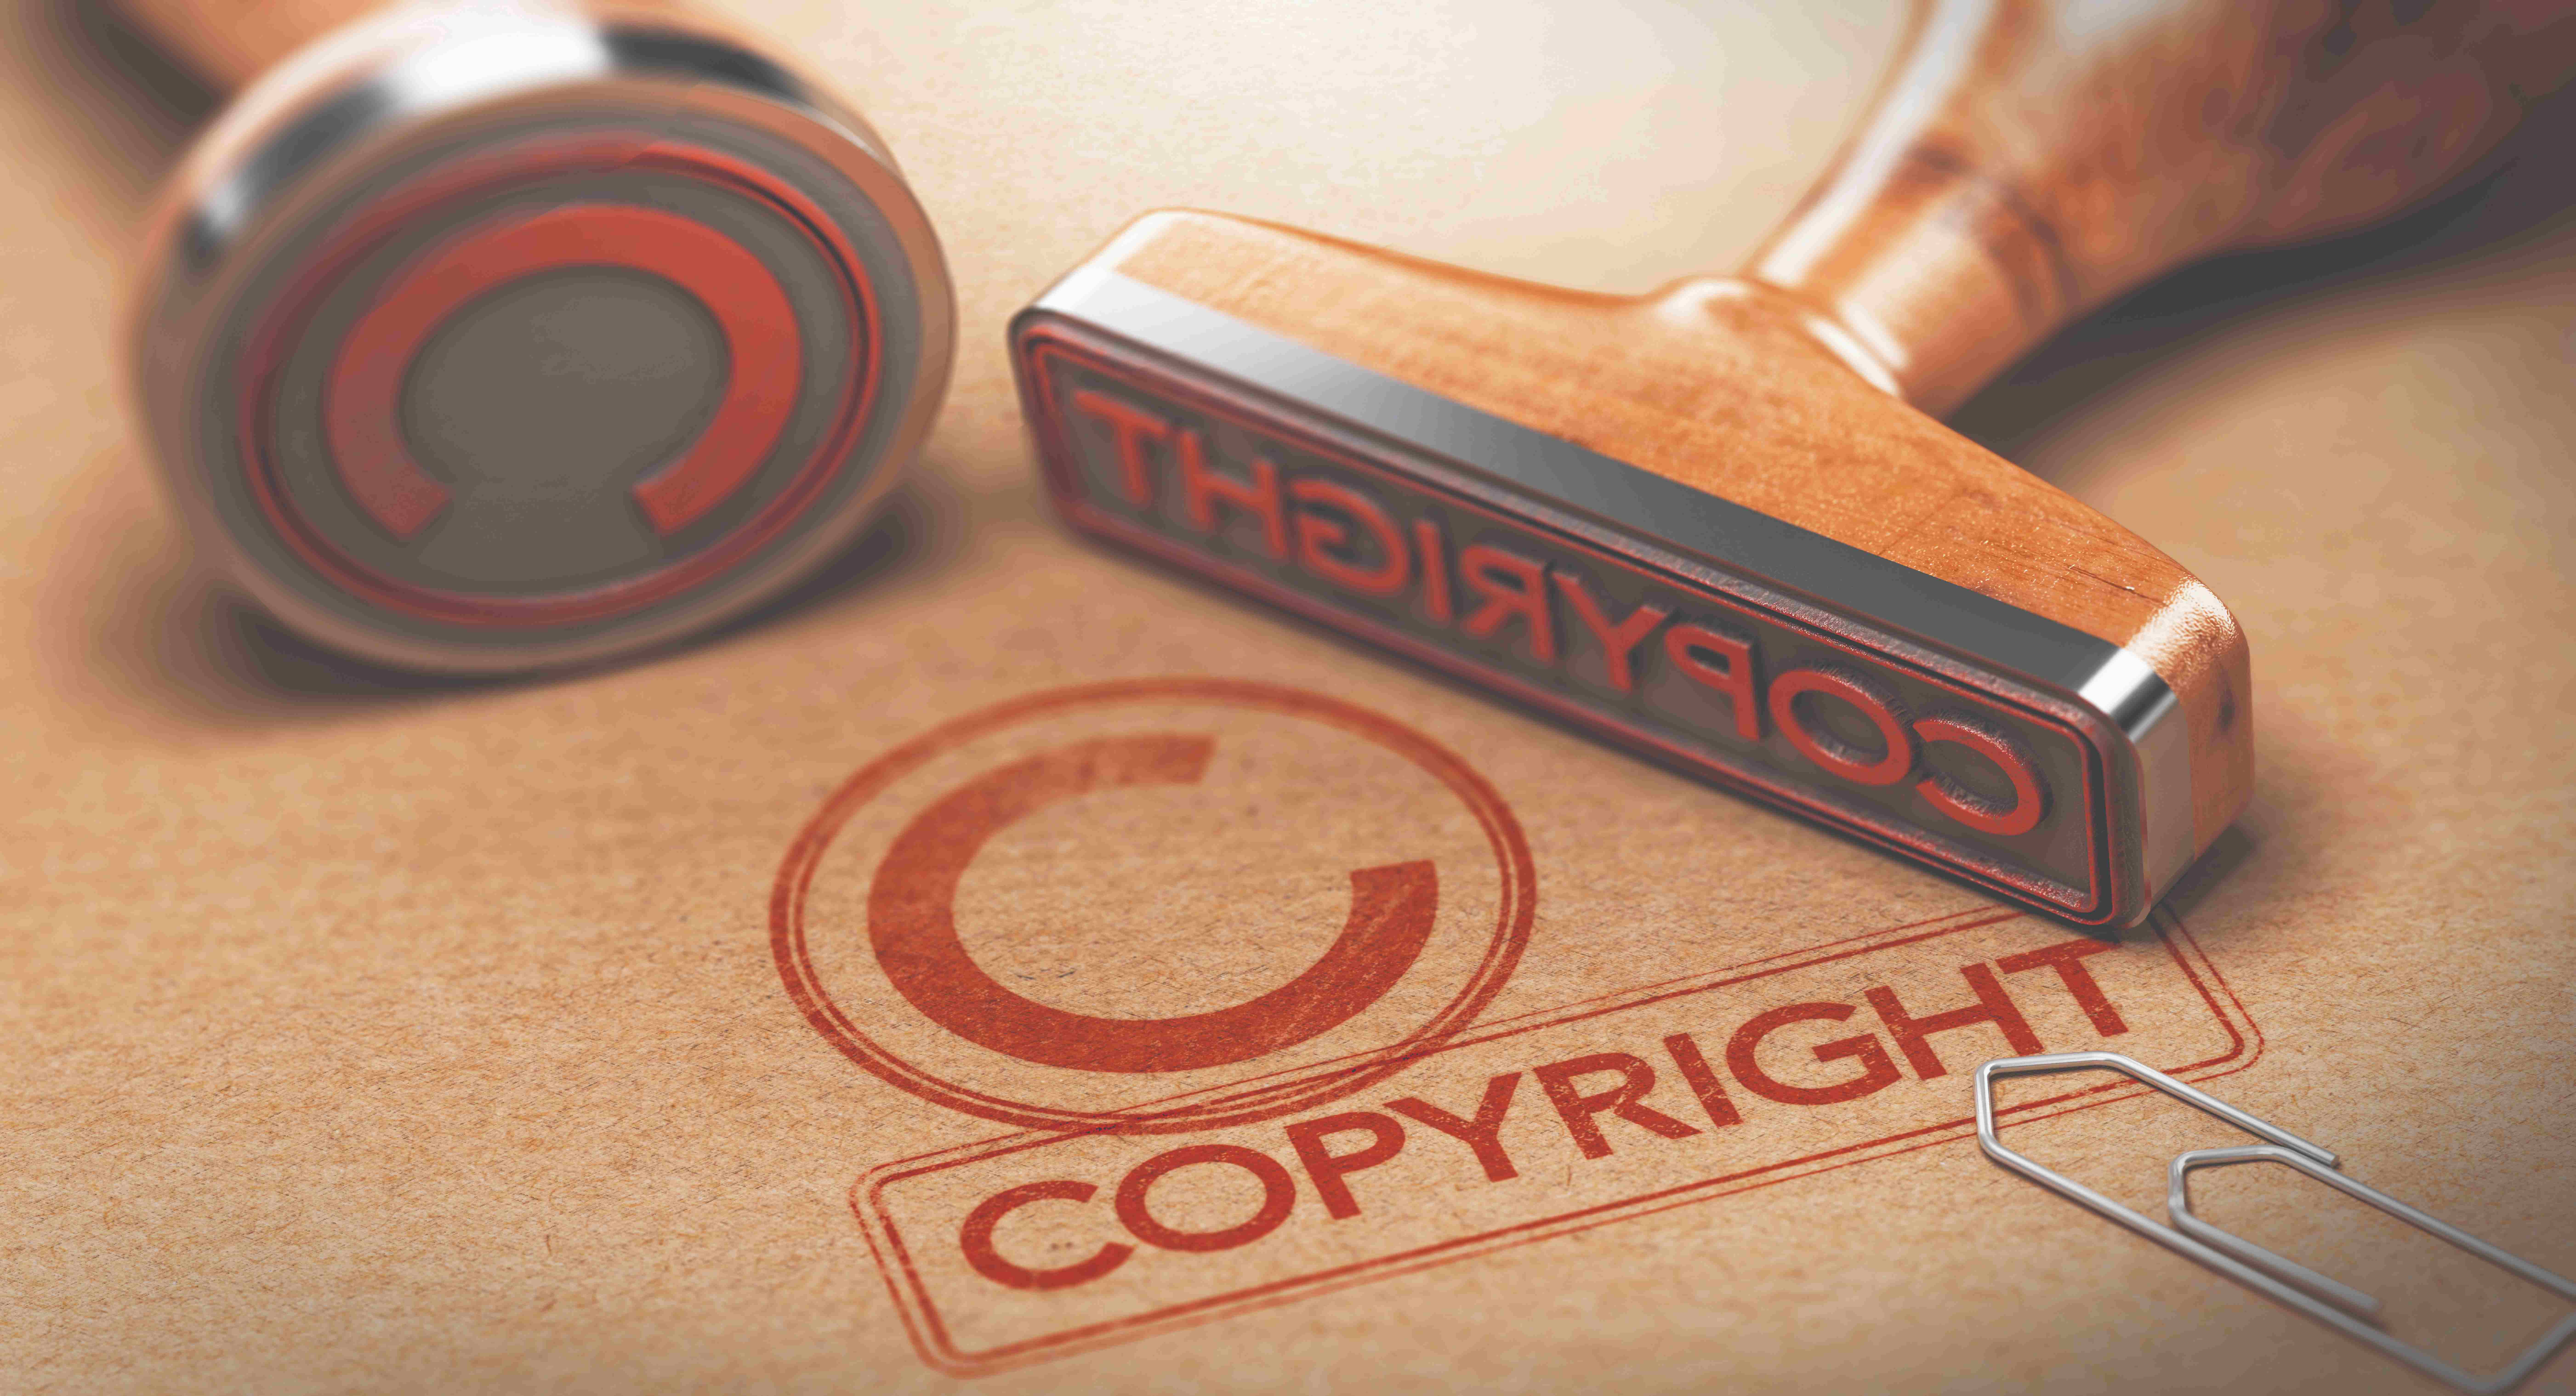 US Copyright Registration